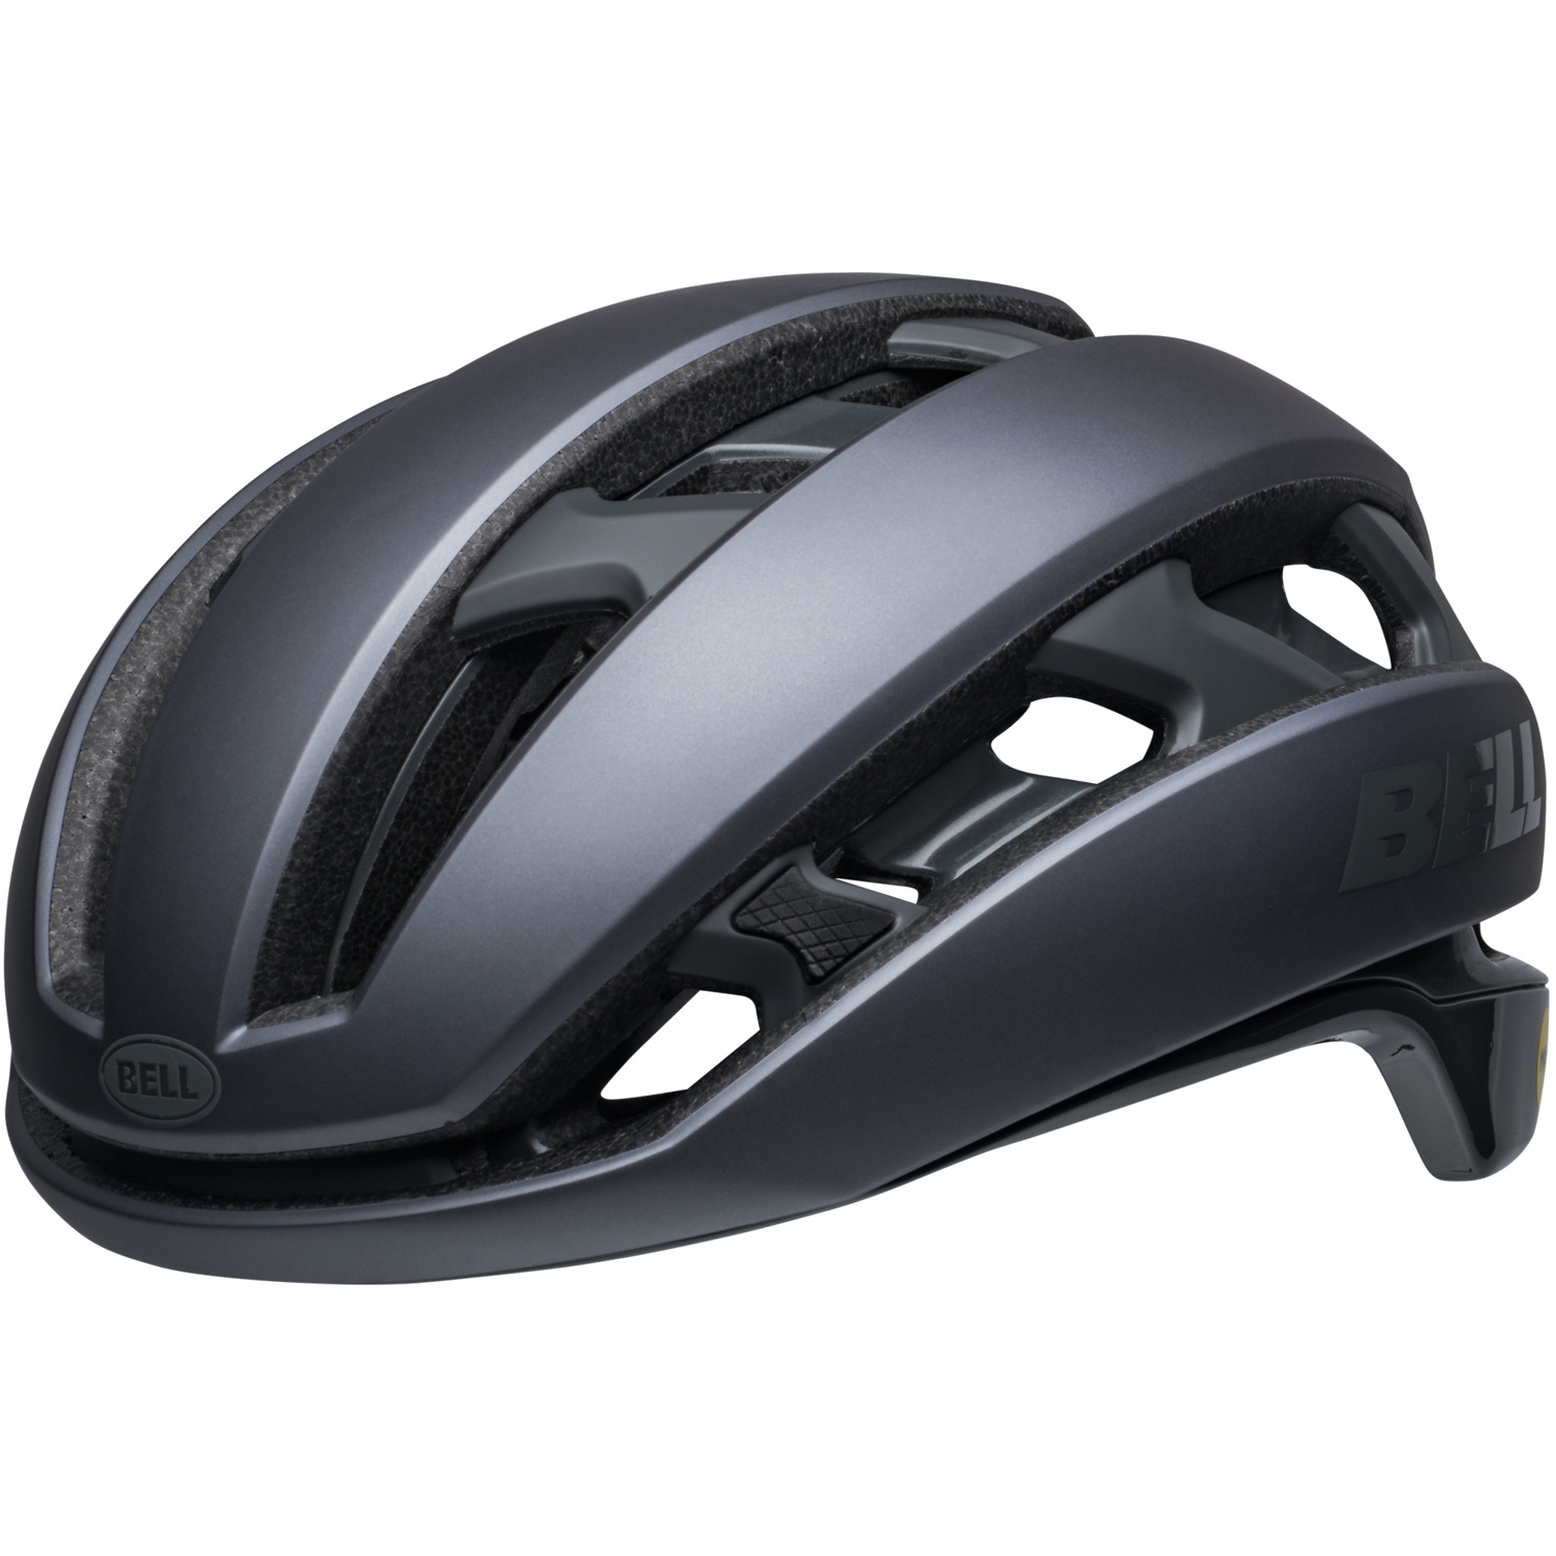 Productfoto van Bell XR Spherical Helm - matte/gloss titanium/gray